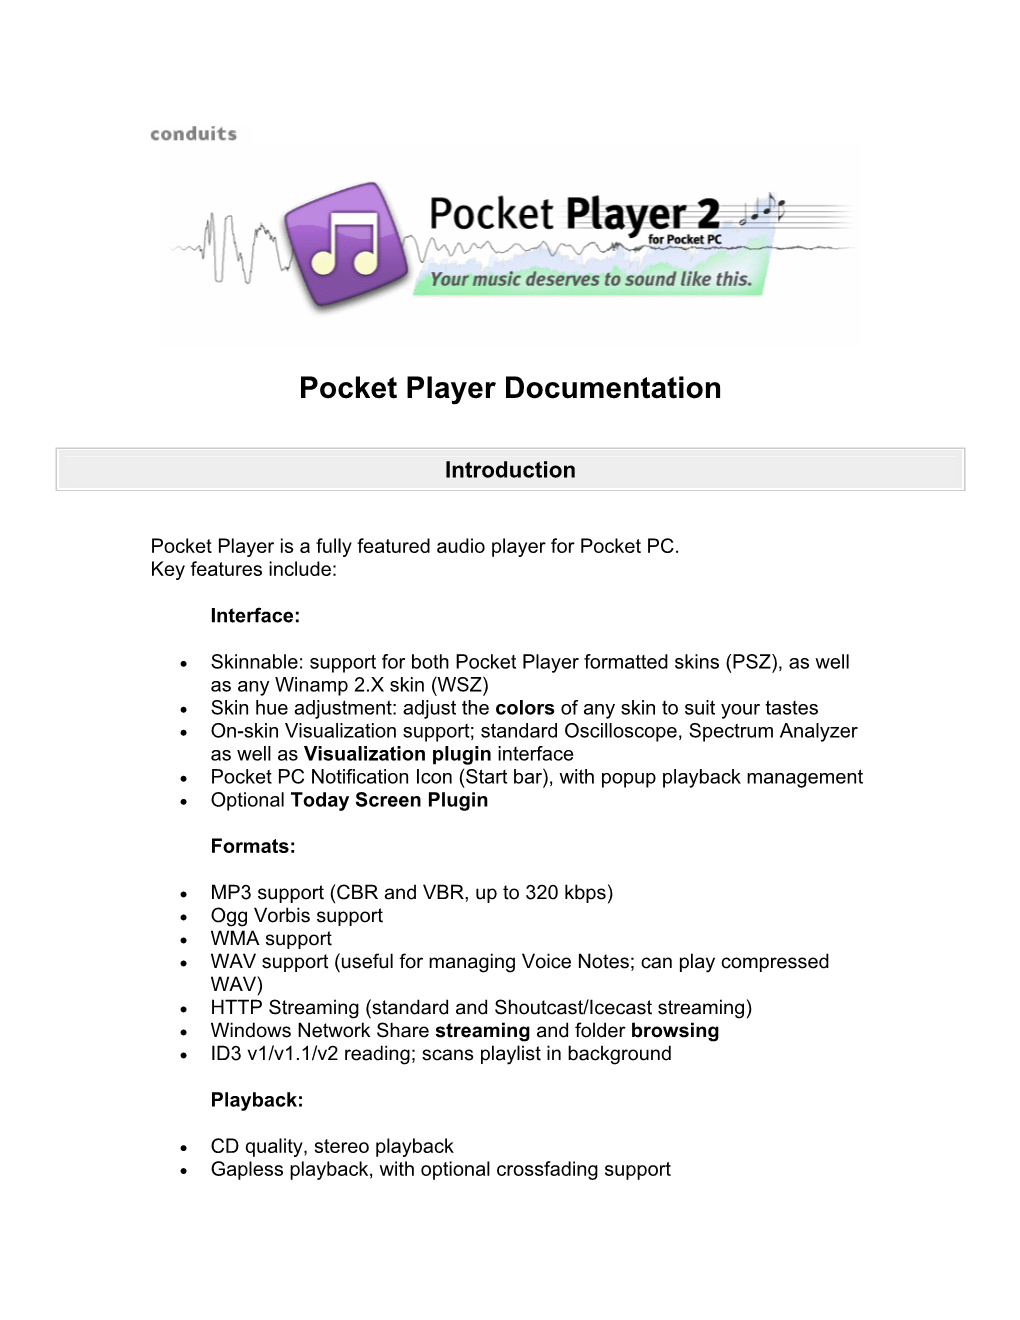 Pocket Player 2 Documentation